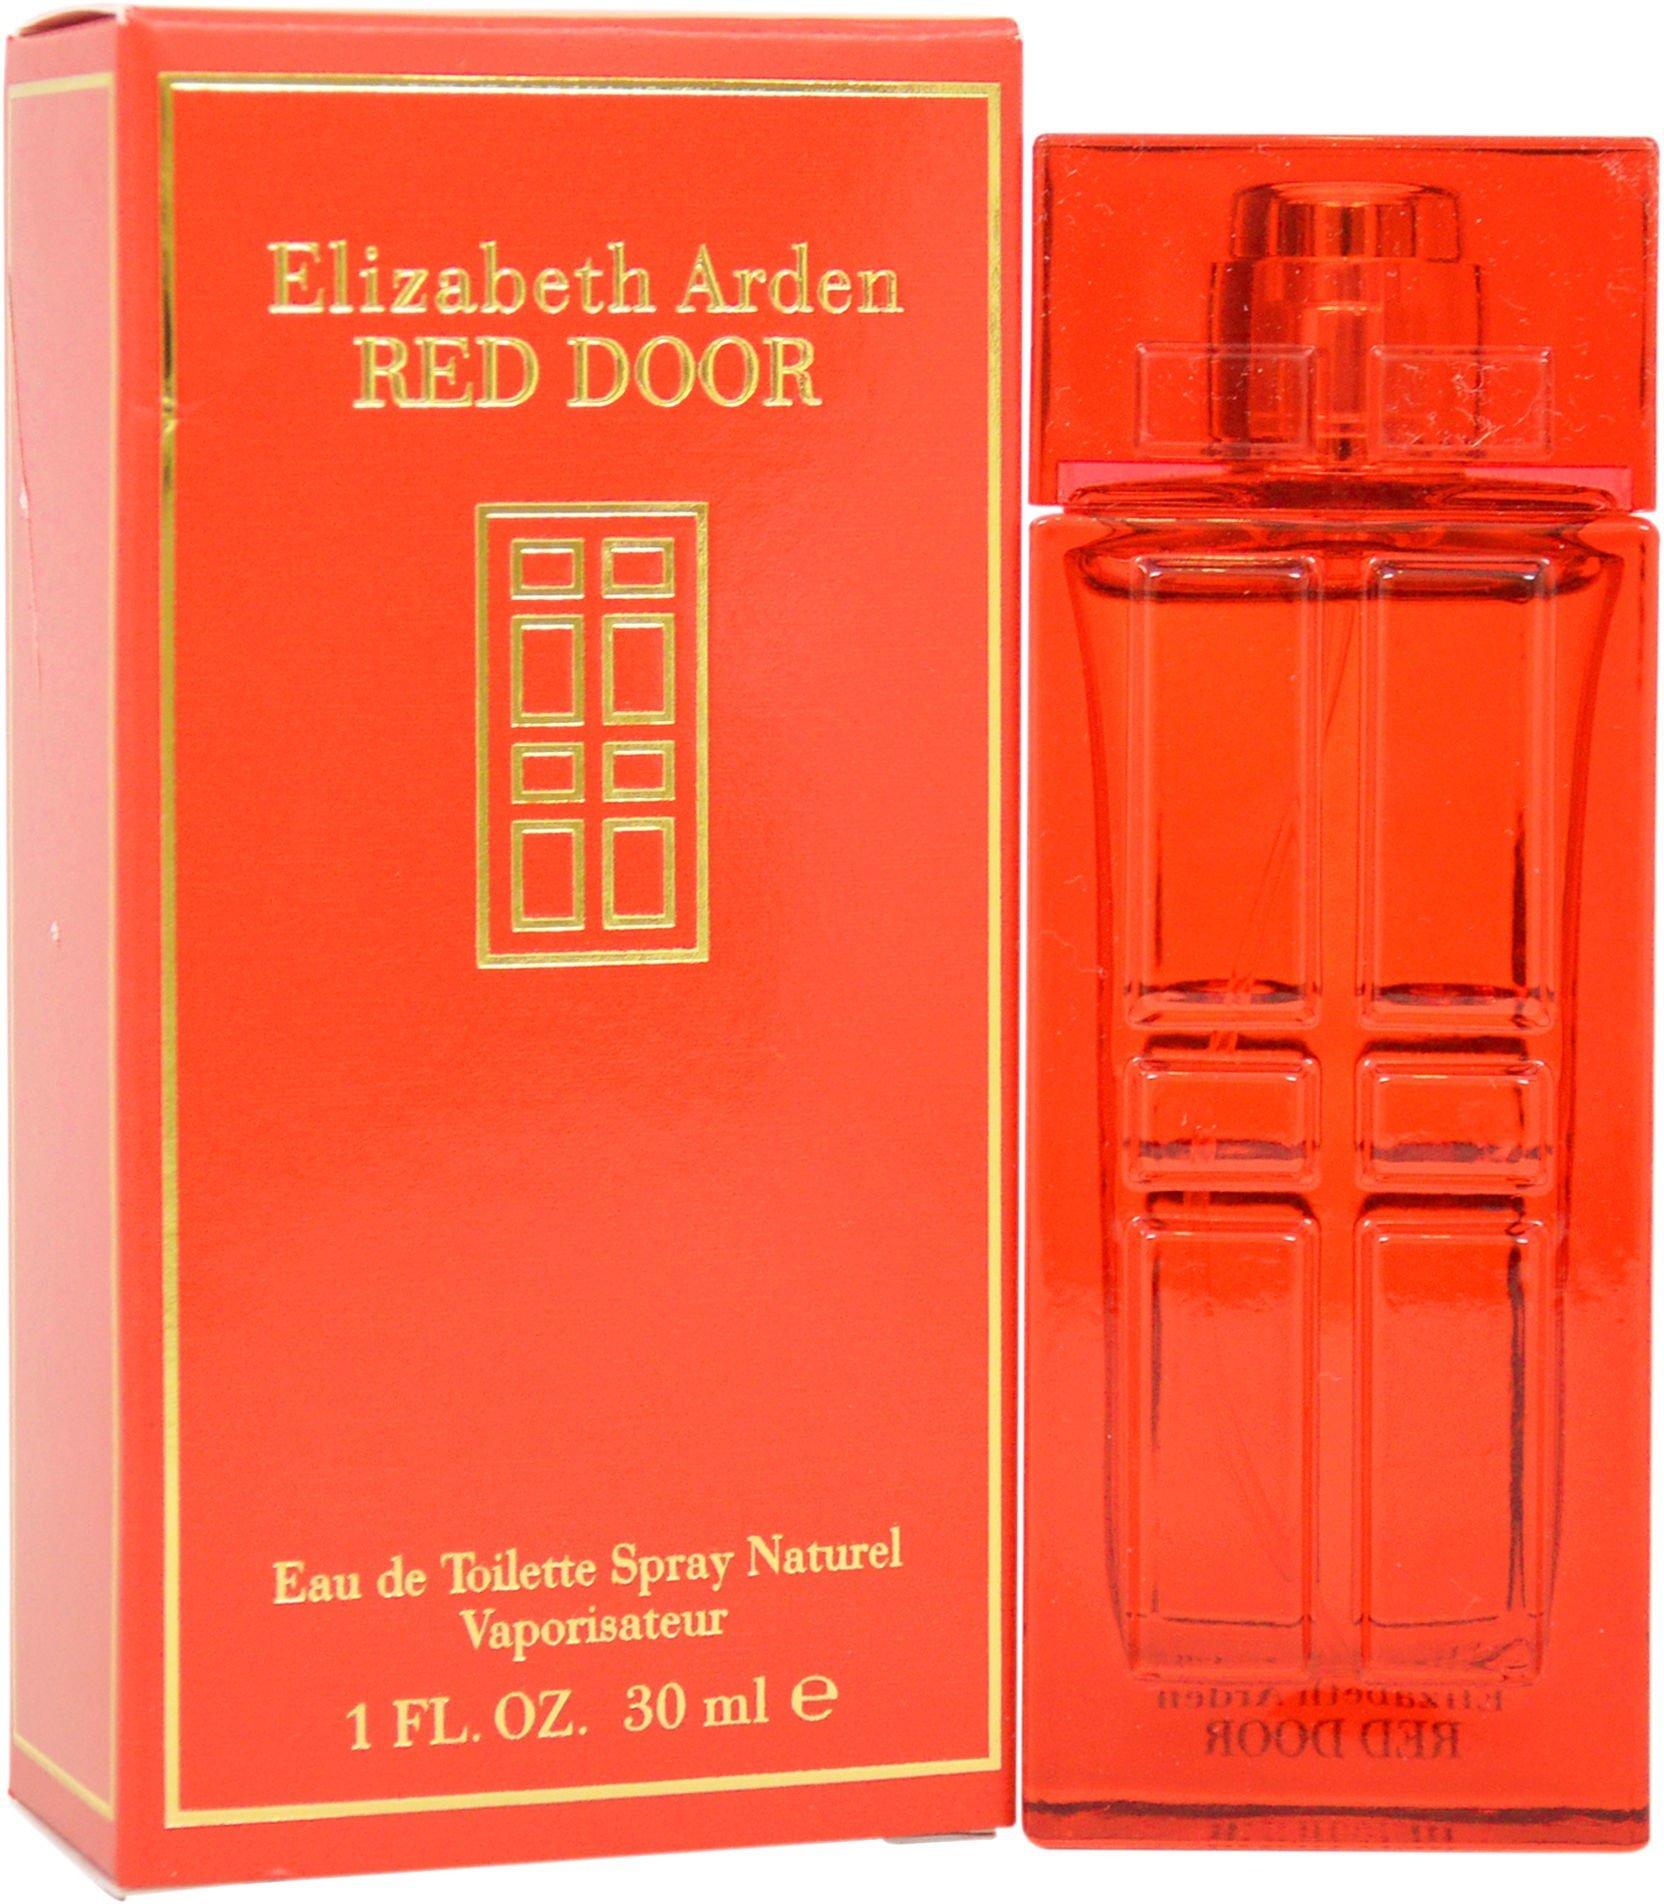 Elizabeth Arden Red Door Eau De Toilette Spray Fragrance